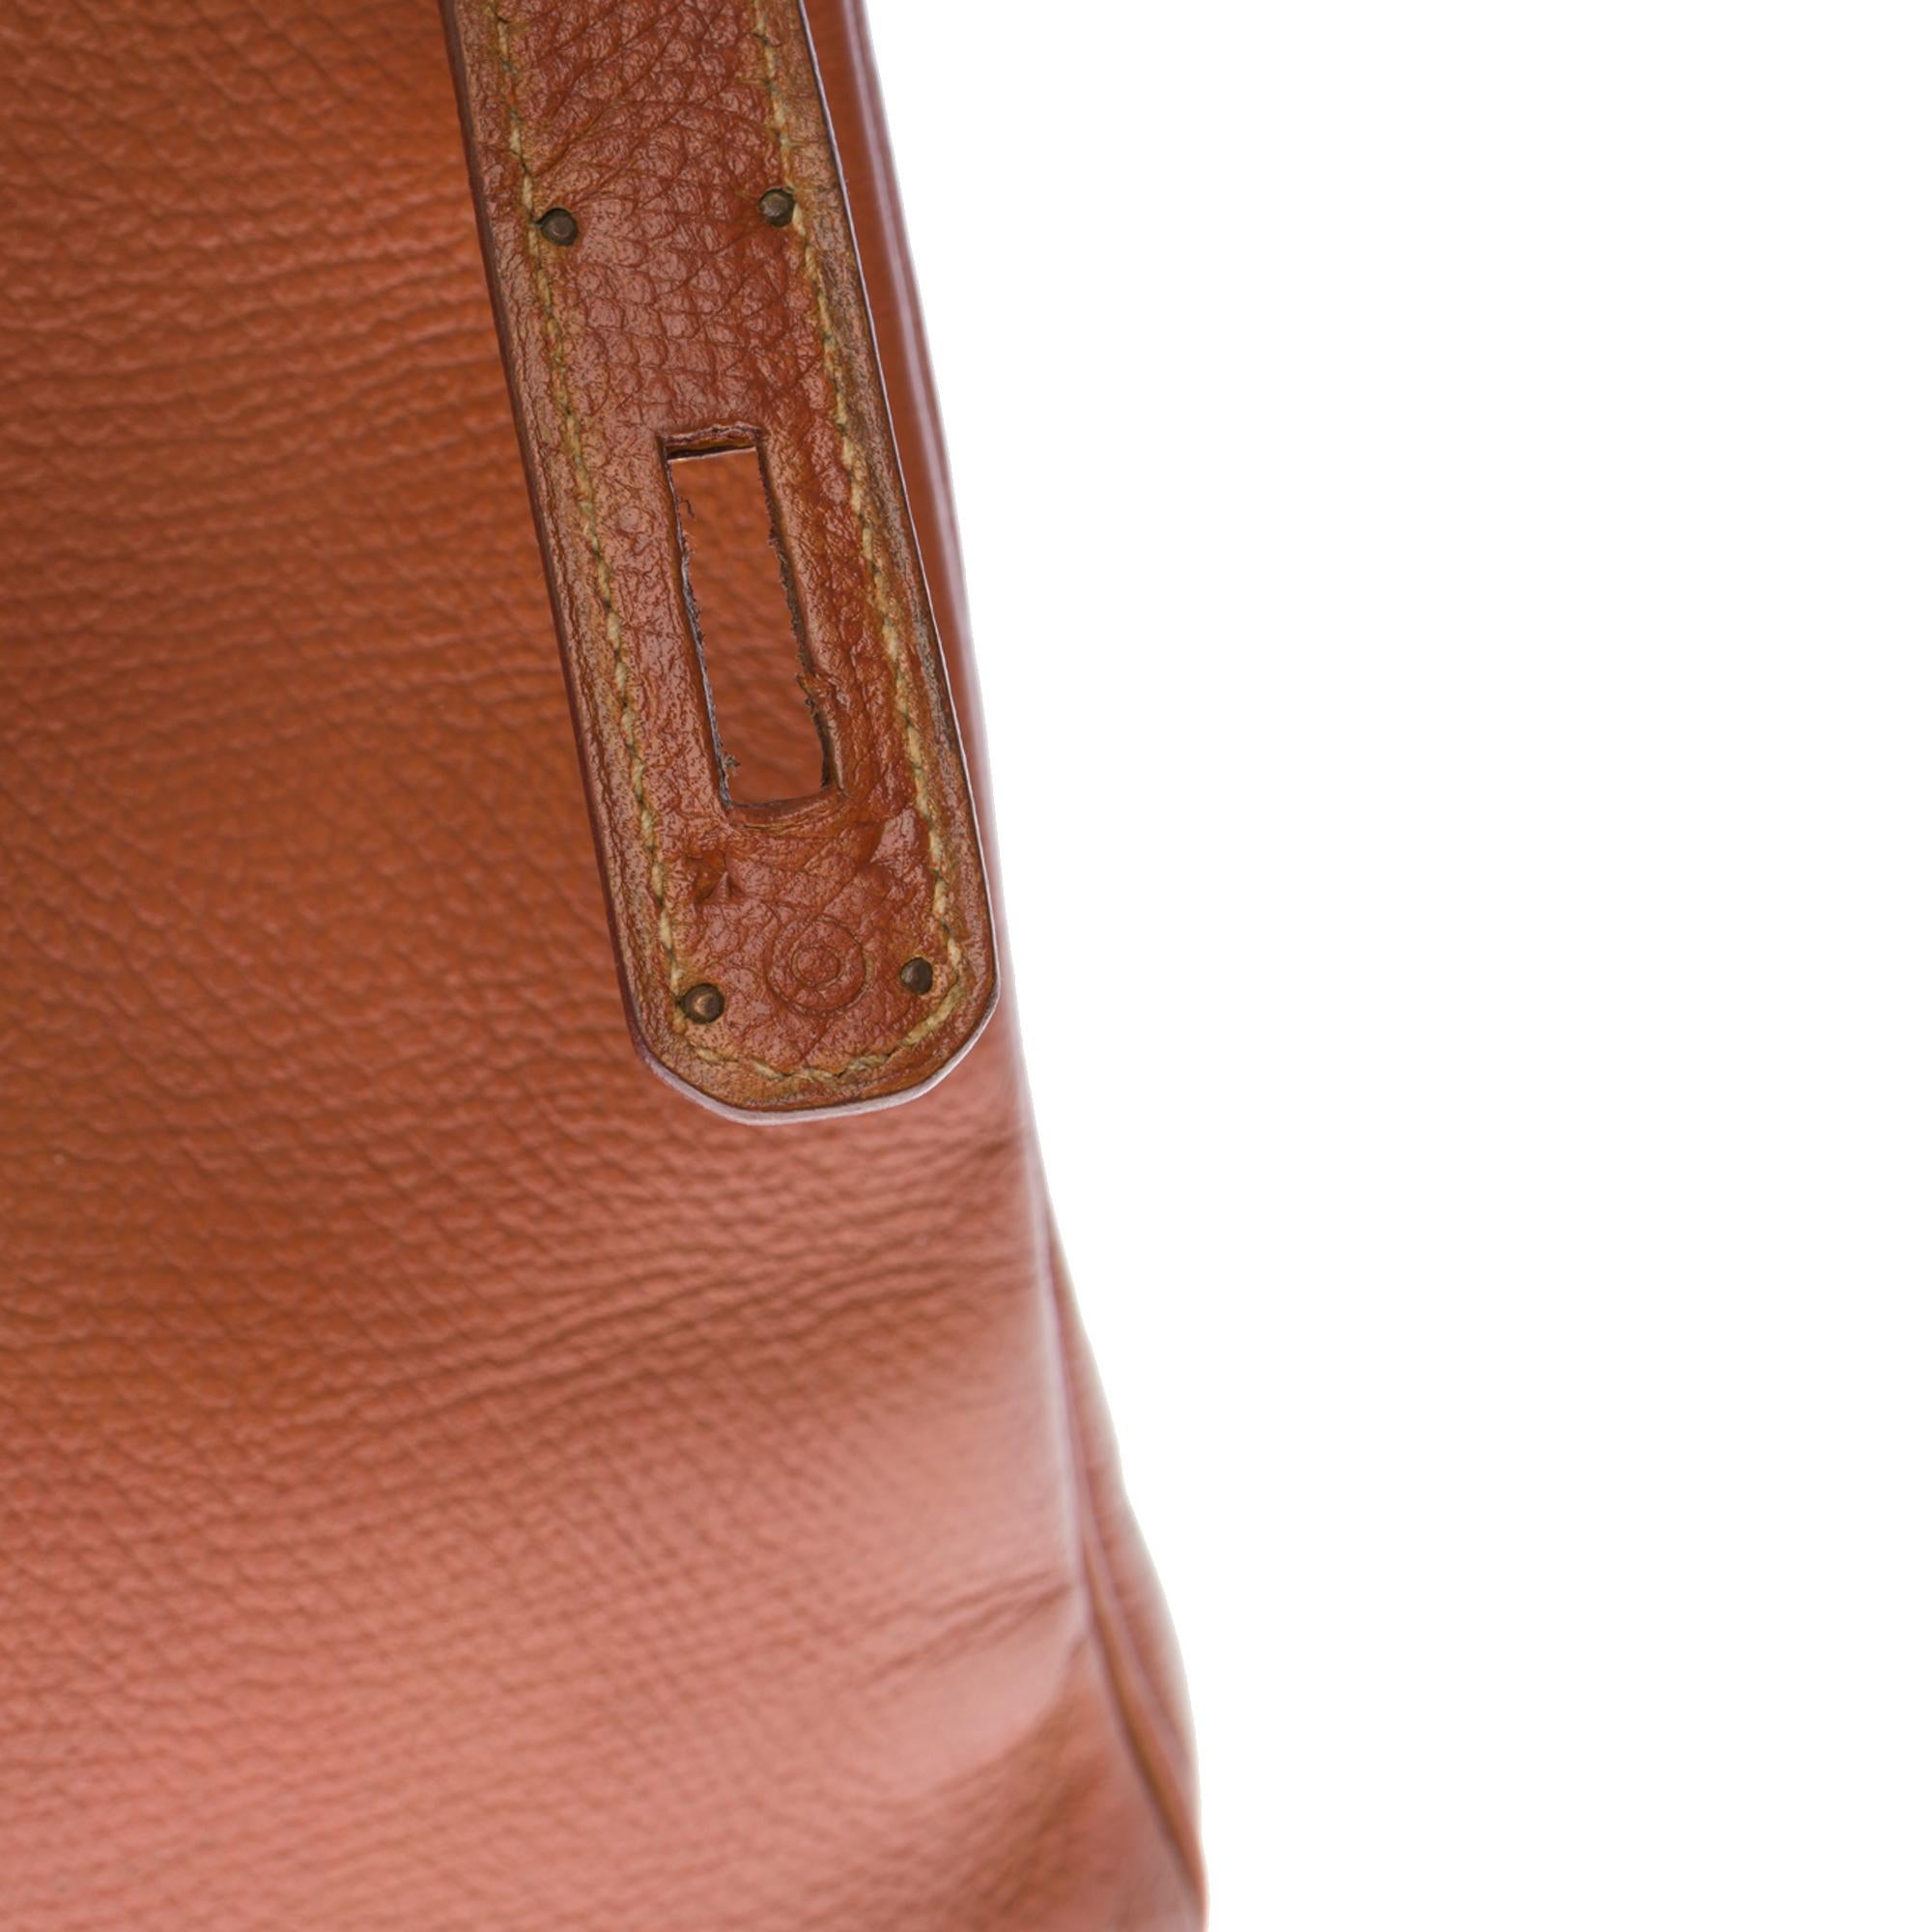 Hermès Kelly 28cm retourné handbag with strap in Gold Courchevel leather, GHW 1